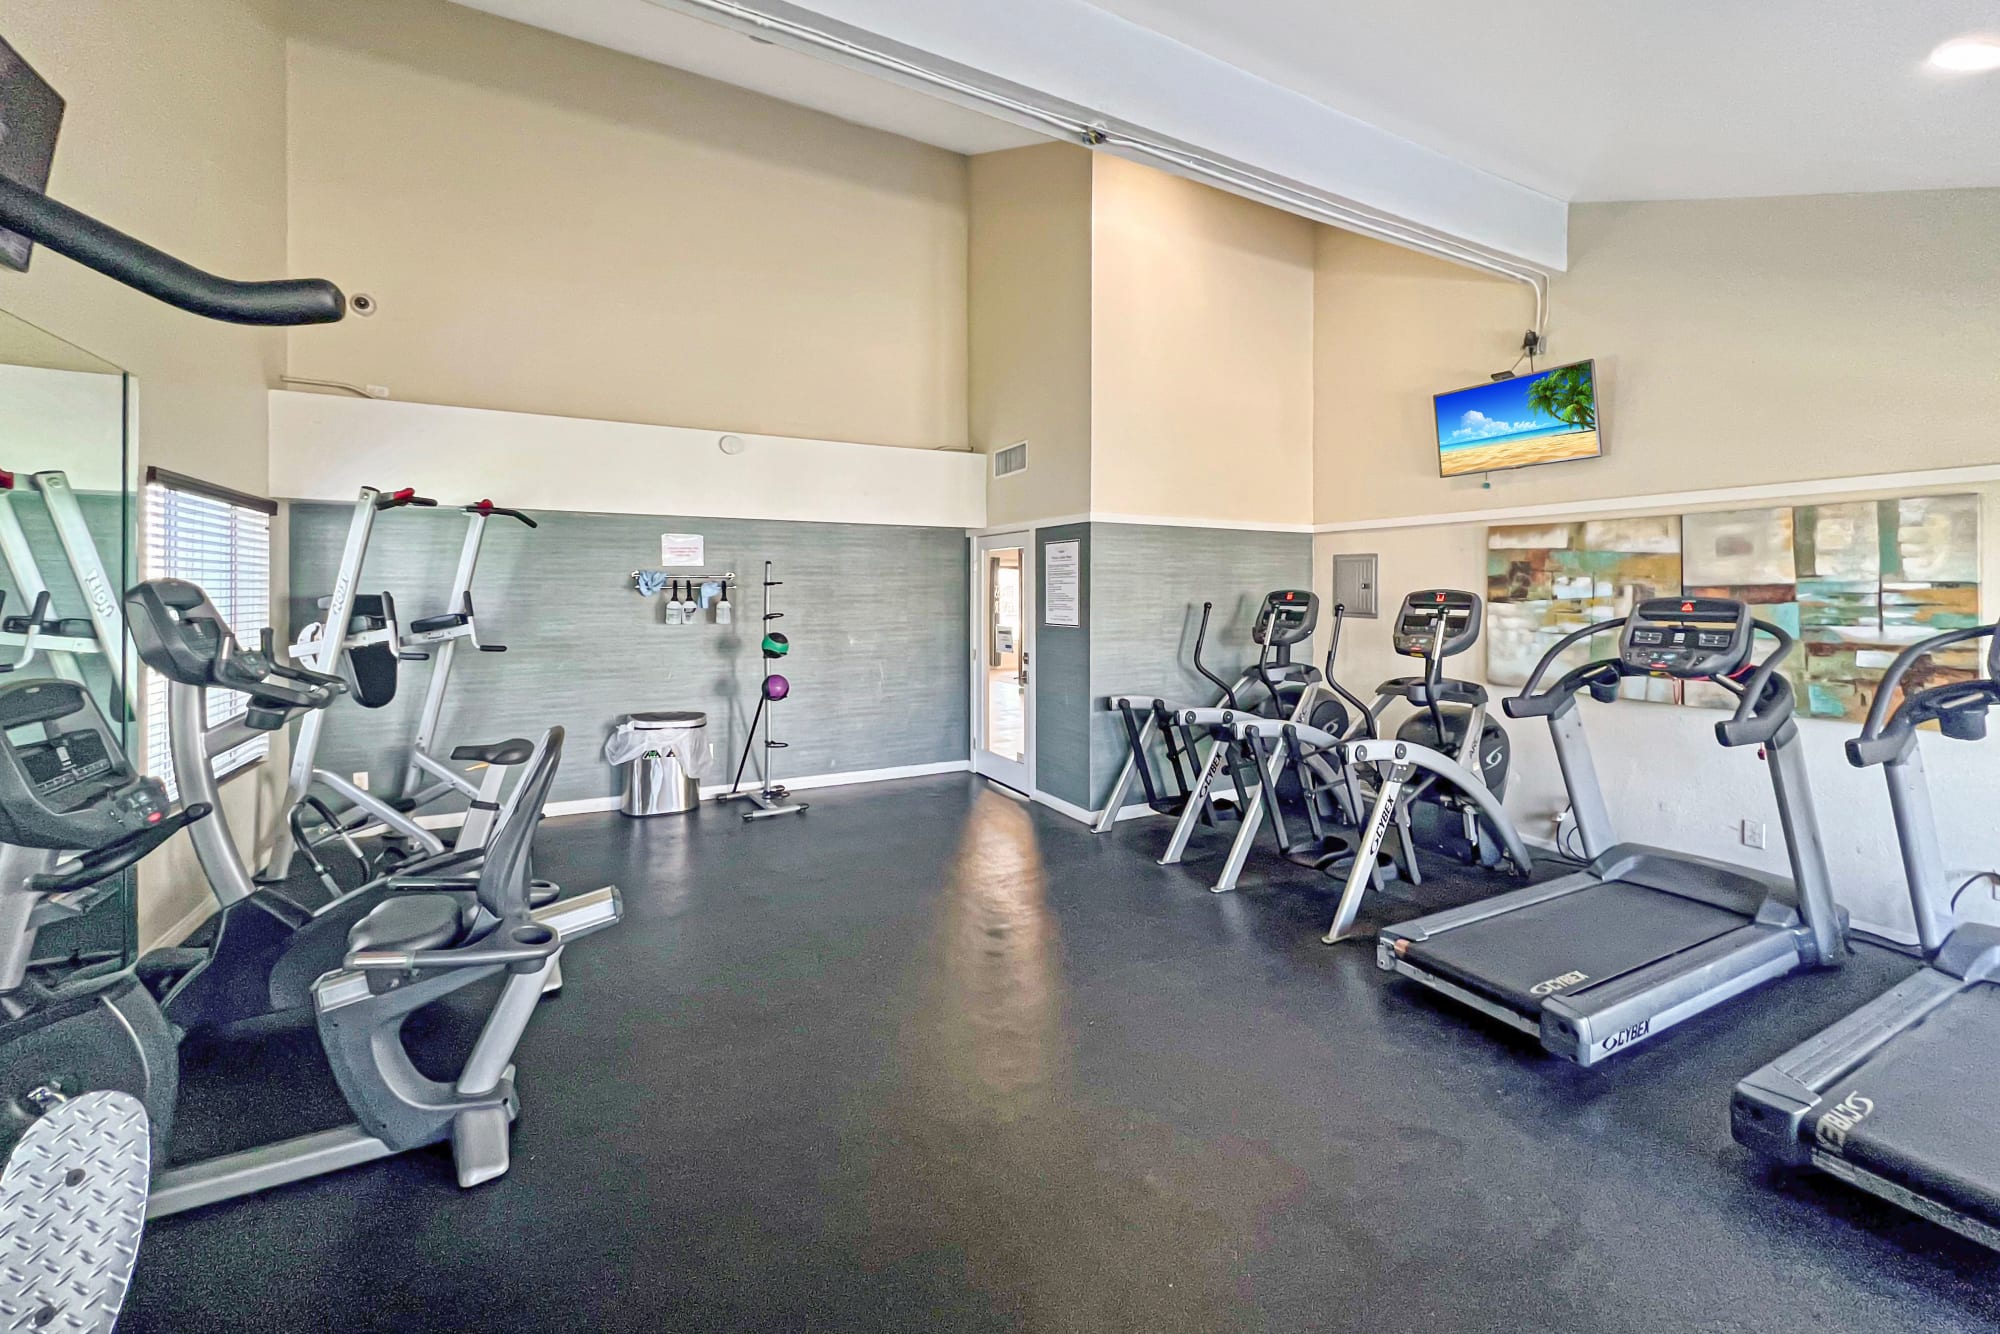 Cardio equipment in the fitness center at Portofino Townhomes in Wilmington, California